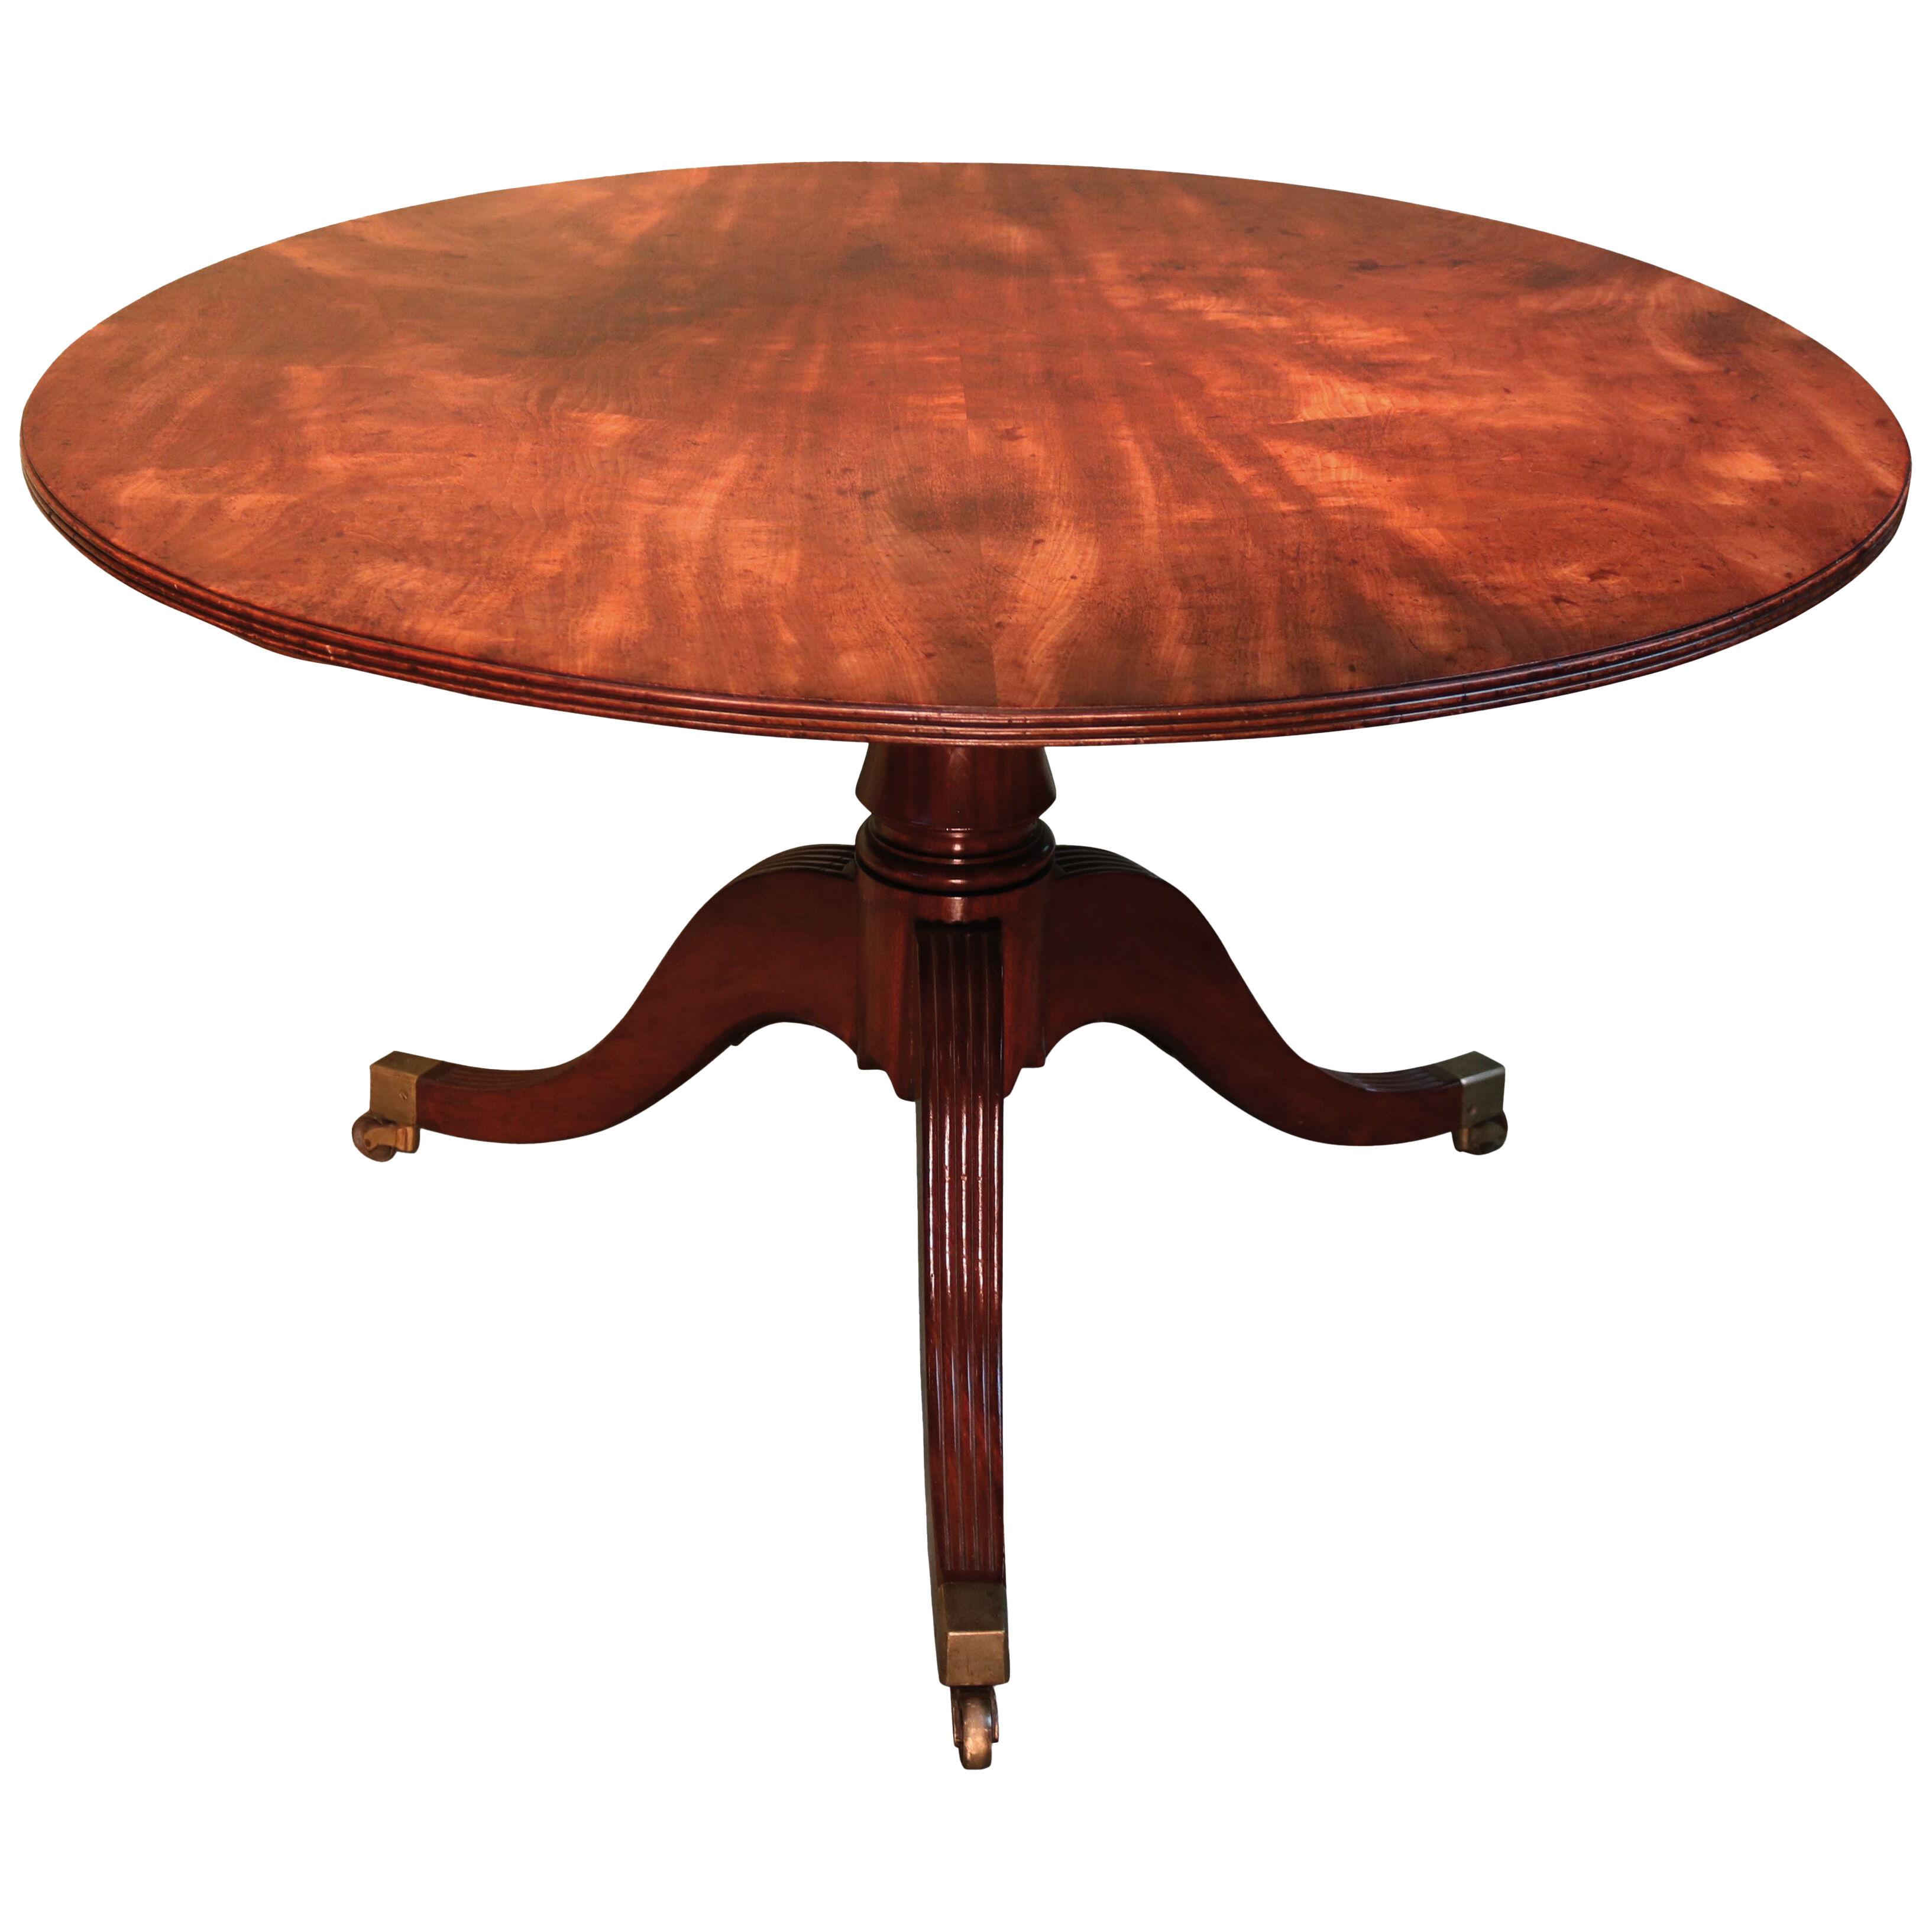 An early 19th century Regency period mahogany circular breakfast table